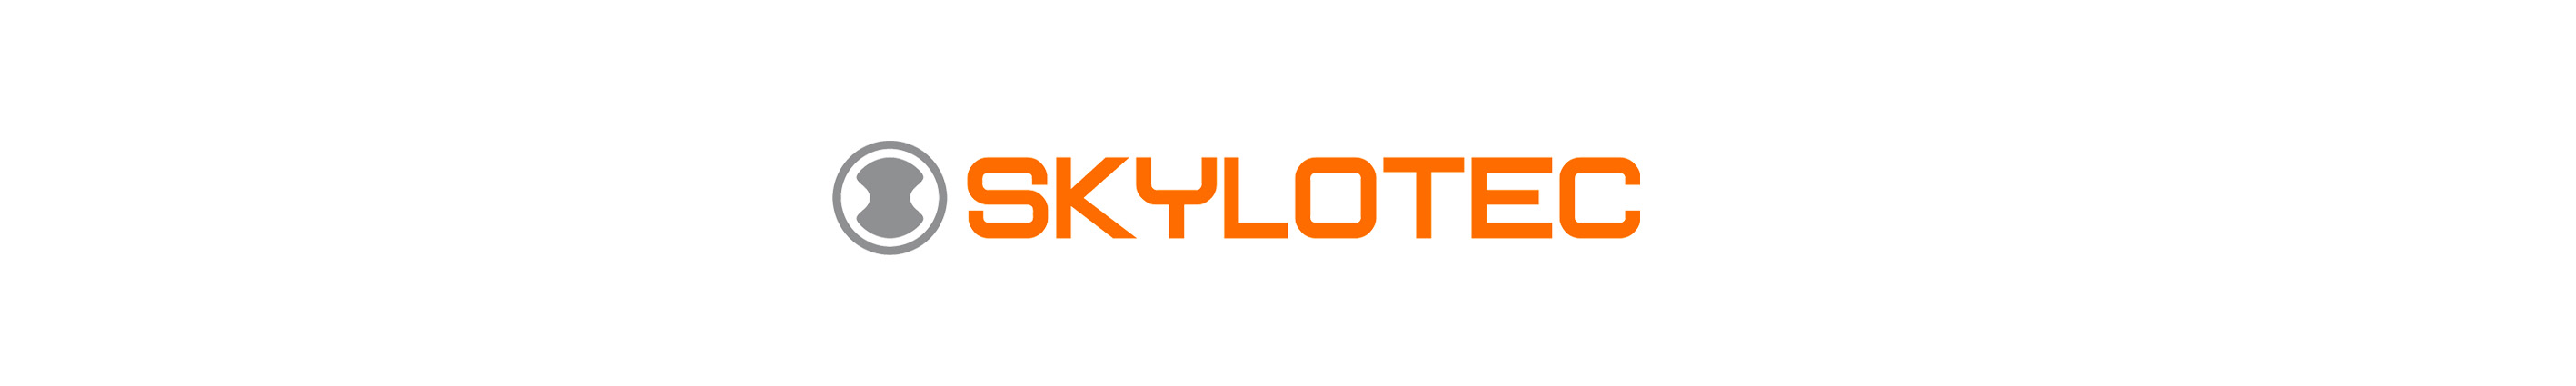 Skylotec | Höhenarbeit | Toprope Shop